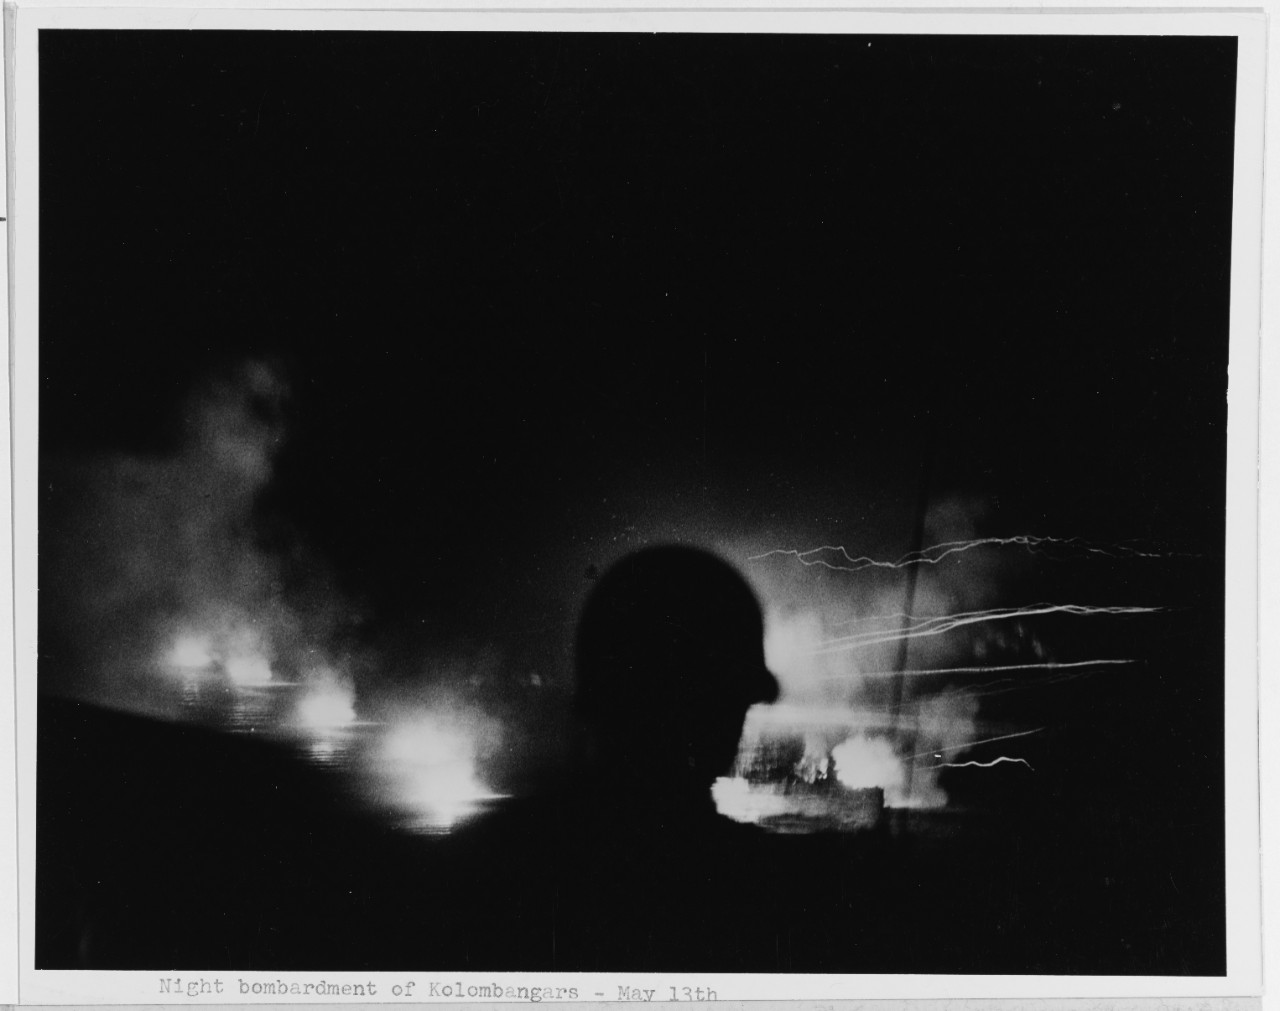 Munda-Vila bombardment, 13 May 1943